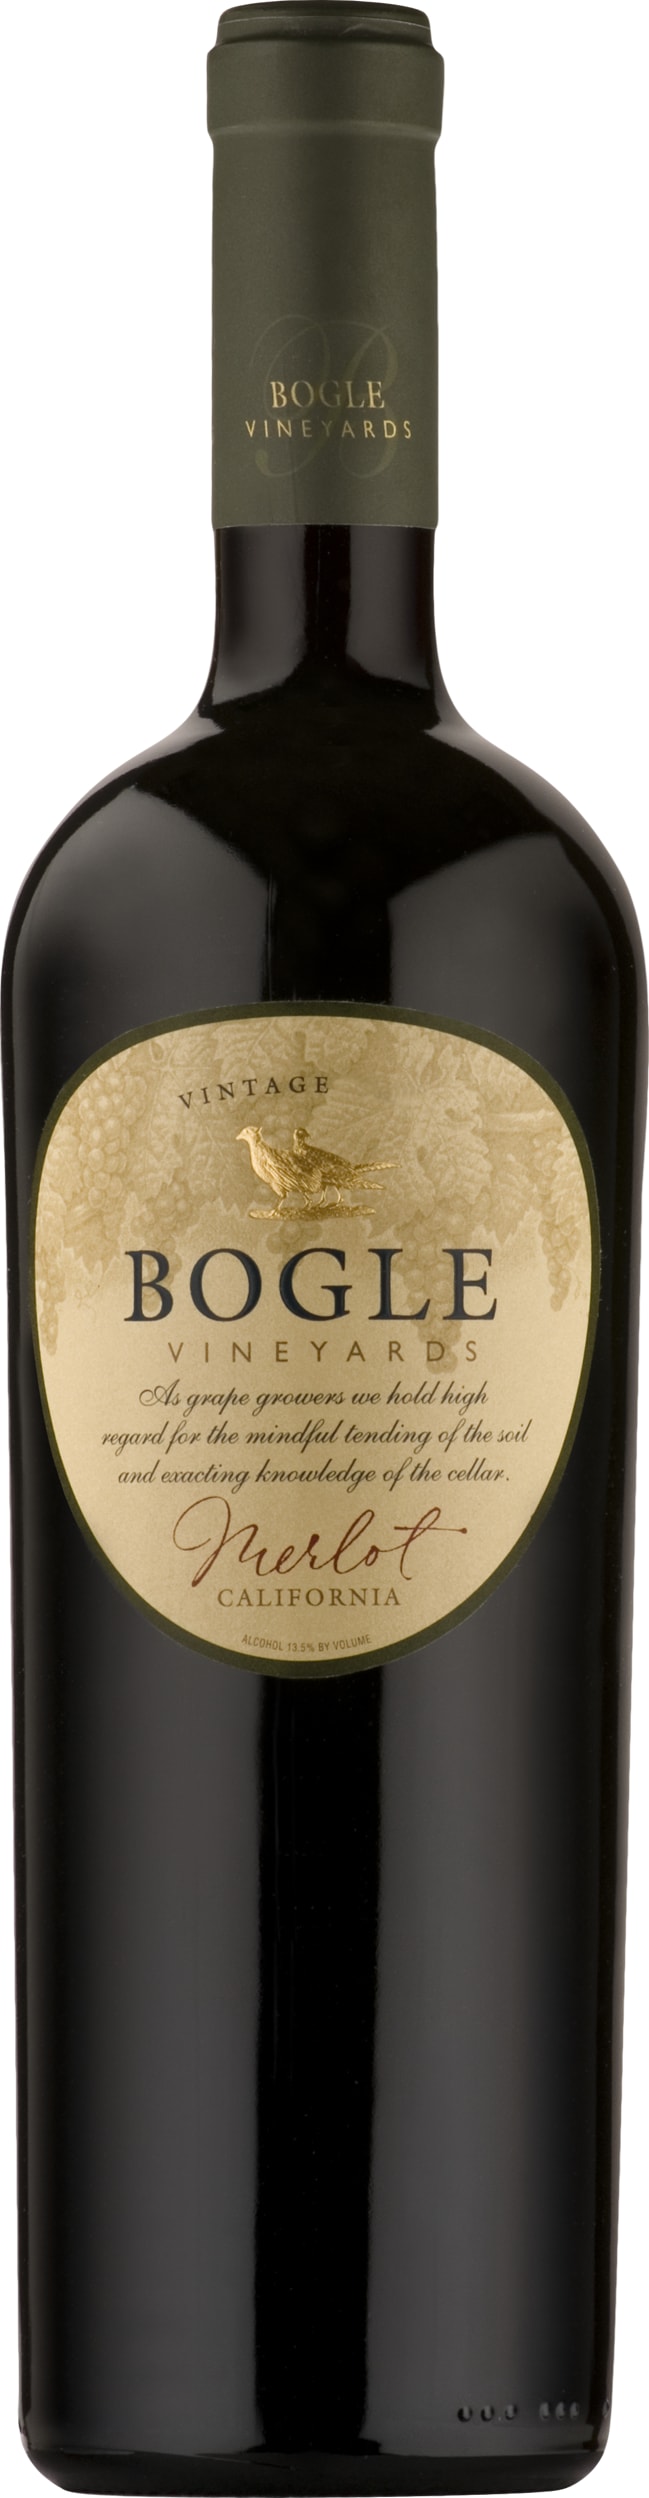 Bogle Family Vineyards Merlot 2020 75cl - Buy Bogle Family Vineyards Wines from GREAT WINES DIRECT wine shop